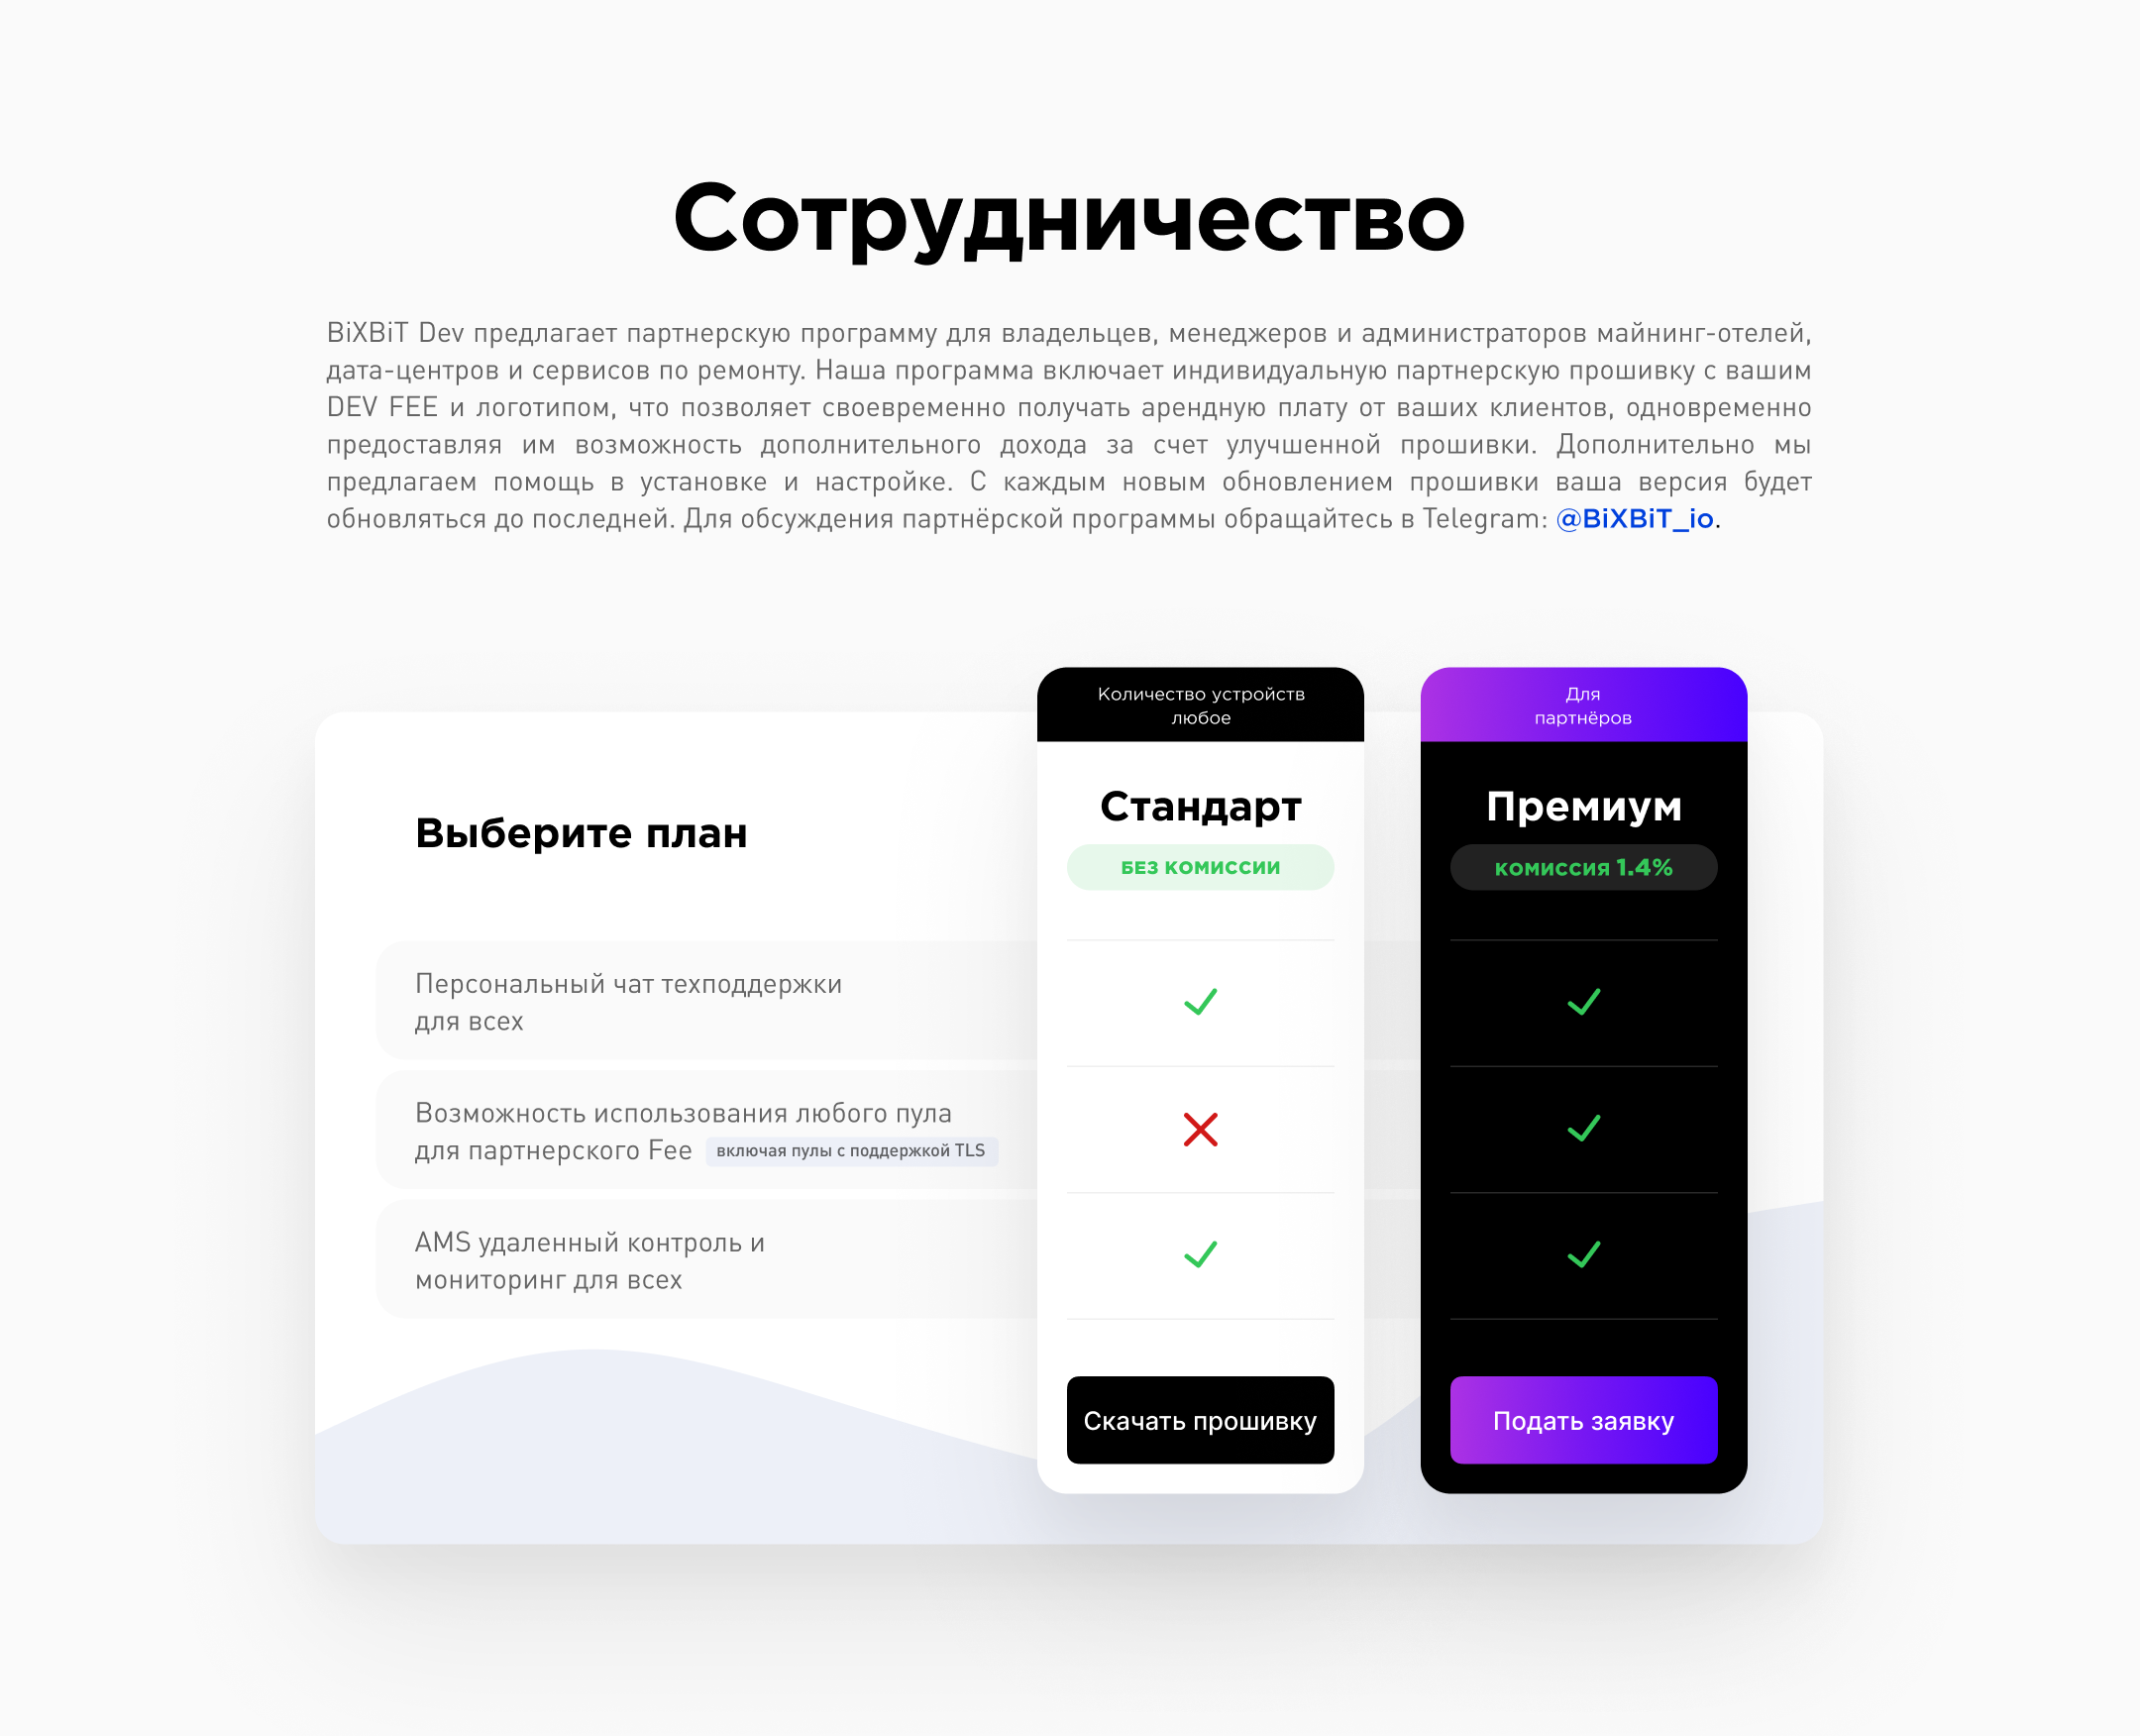 QVg9e_bixbit_partnership_ru.png